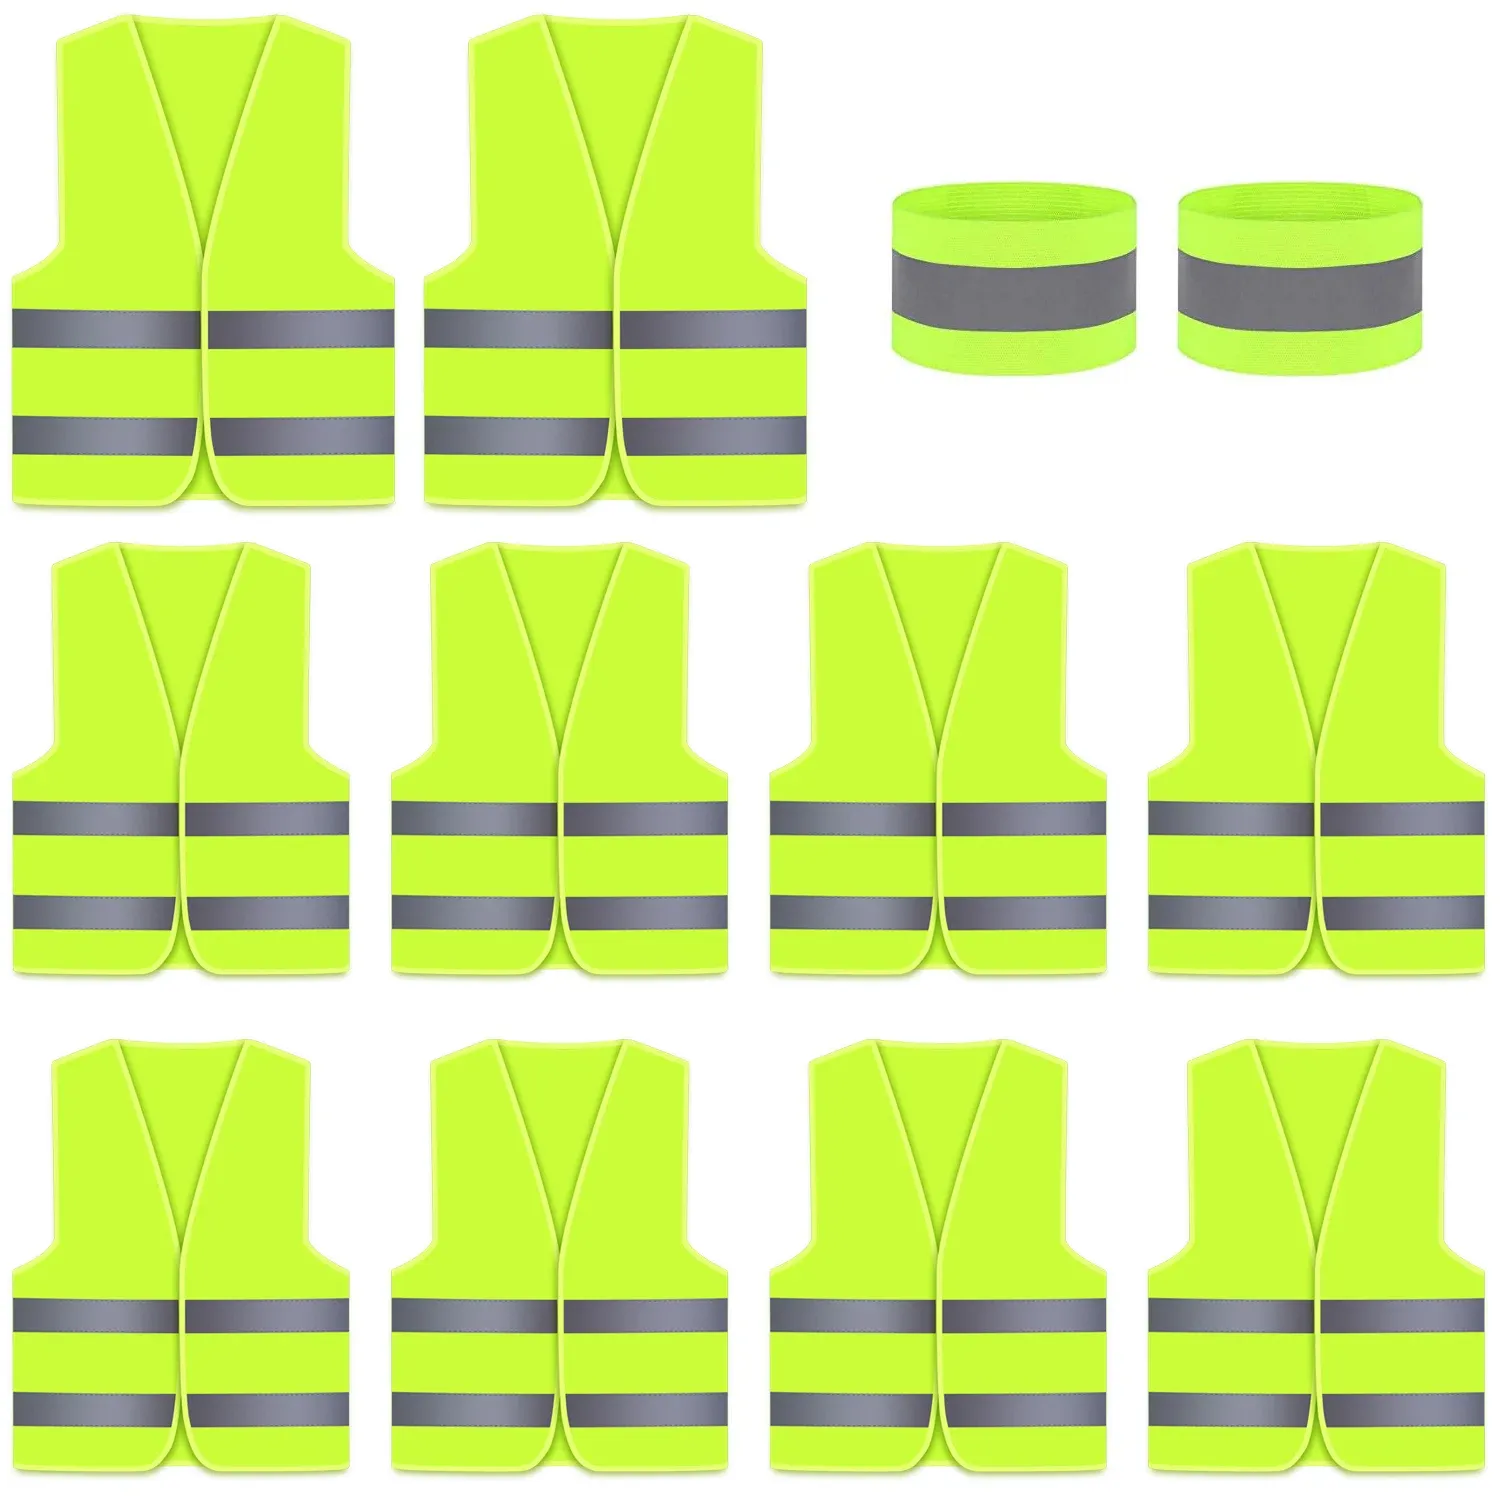 Mats 10 Packs Hi Vis Reflective Vest, High Visibility Safety Vests for Men, Women, Neon Yellow/Green Color